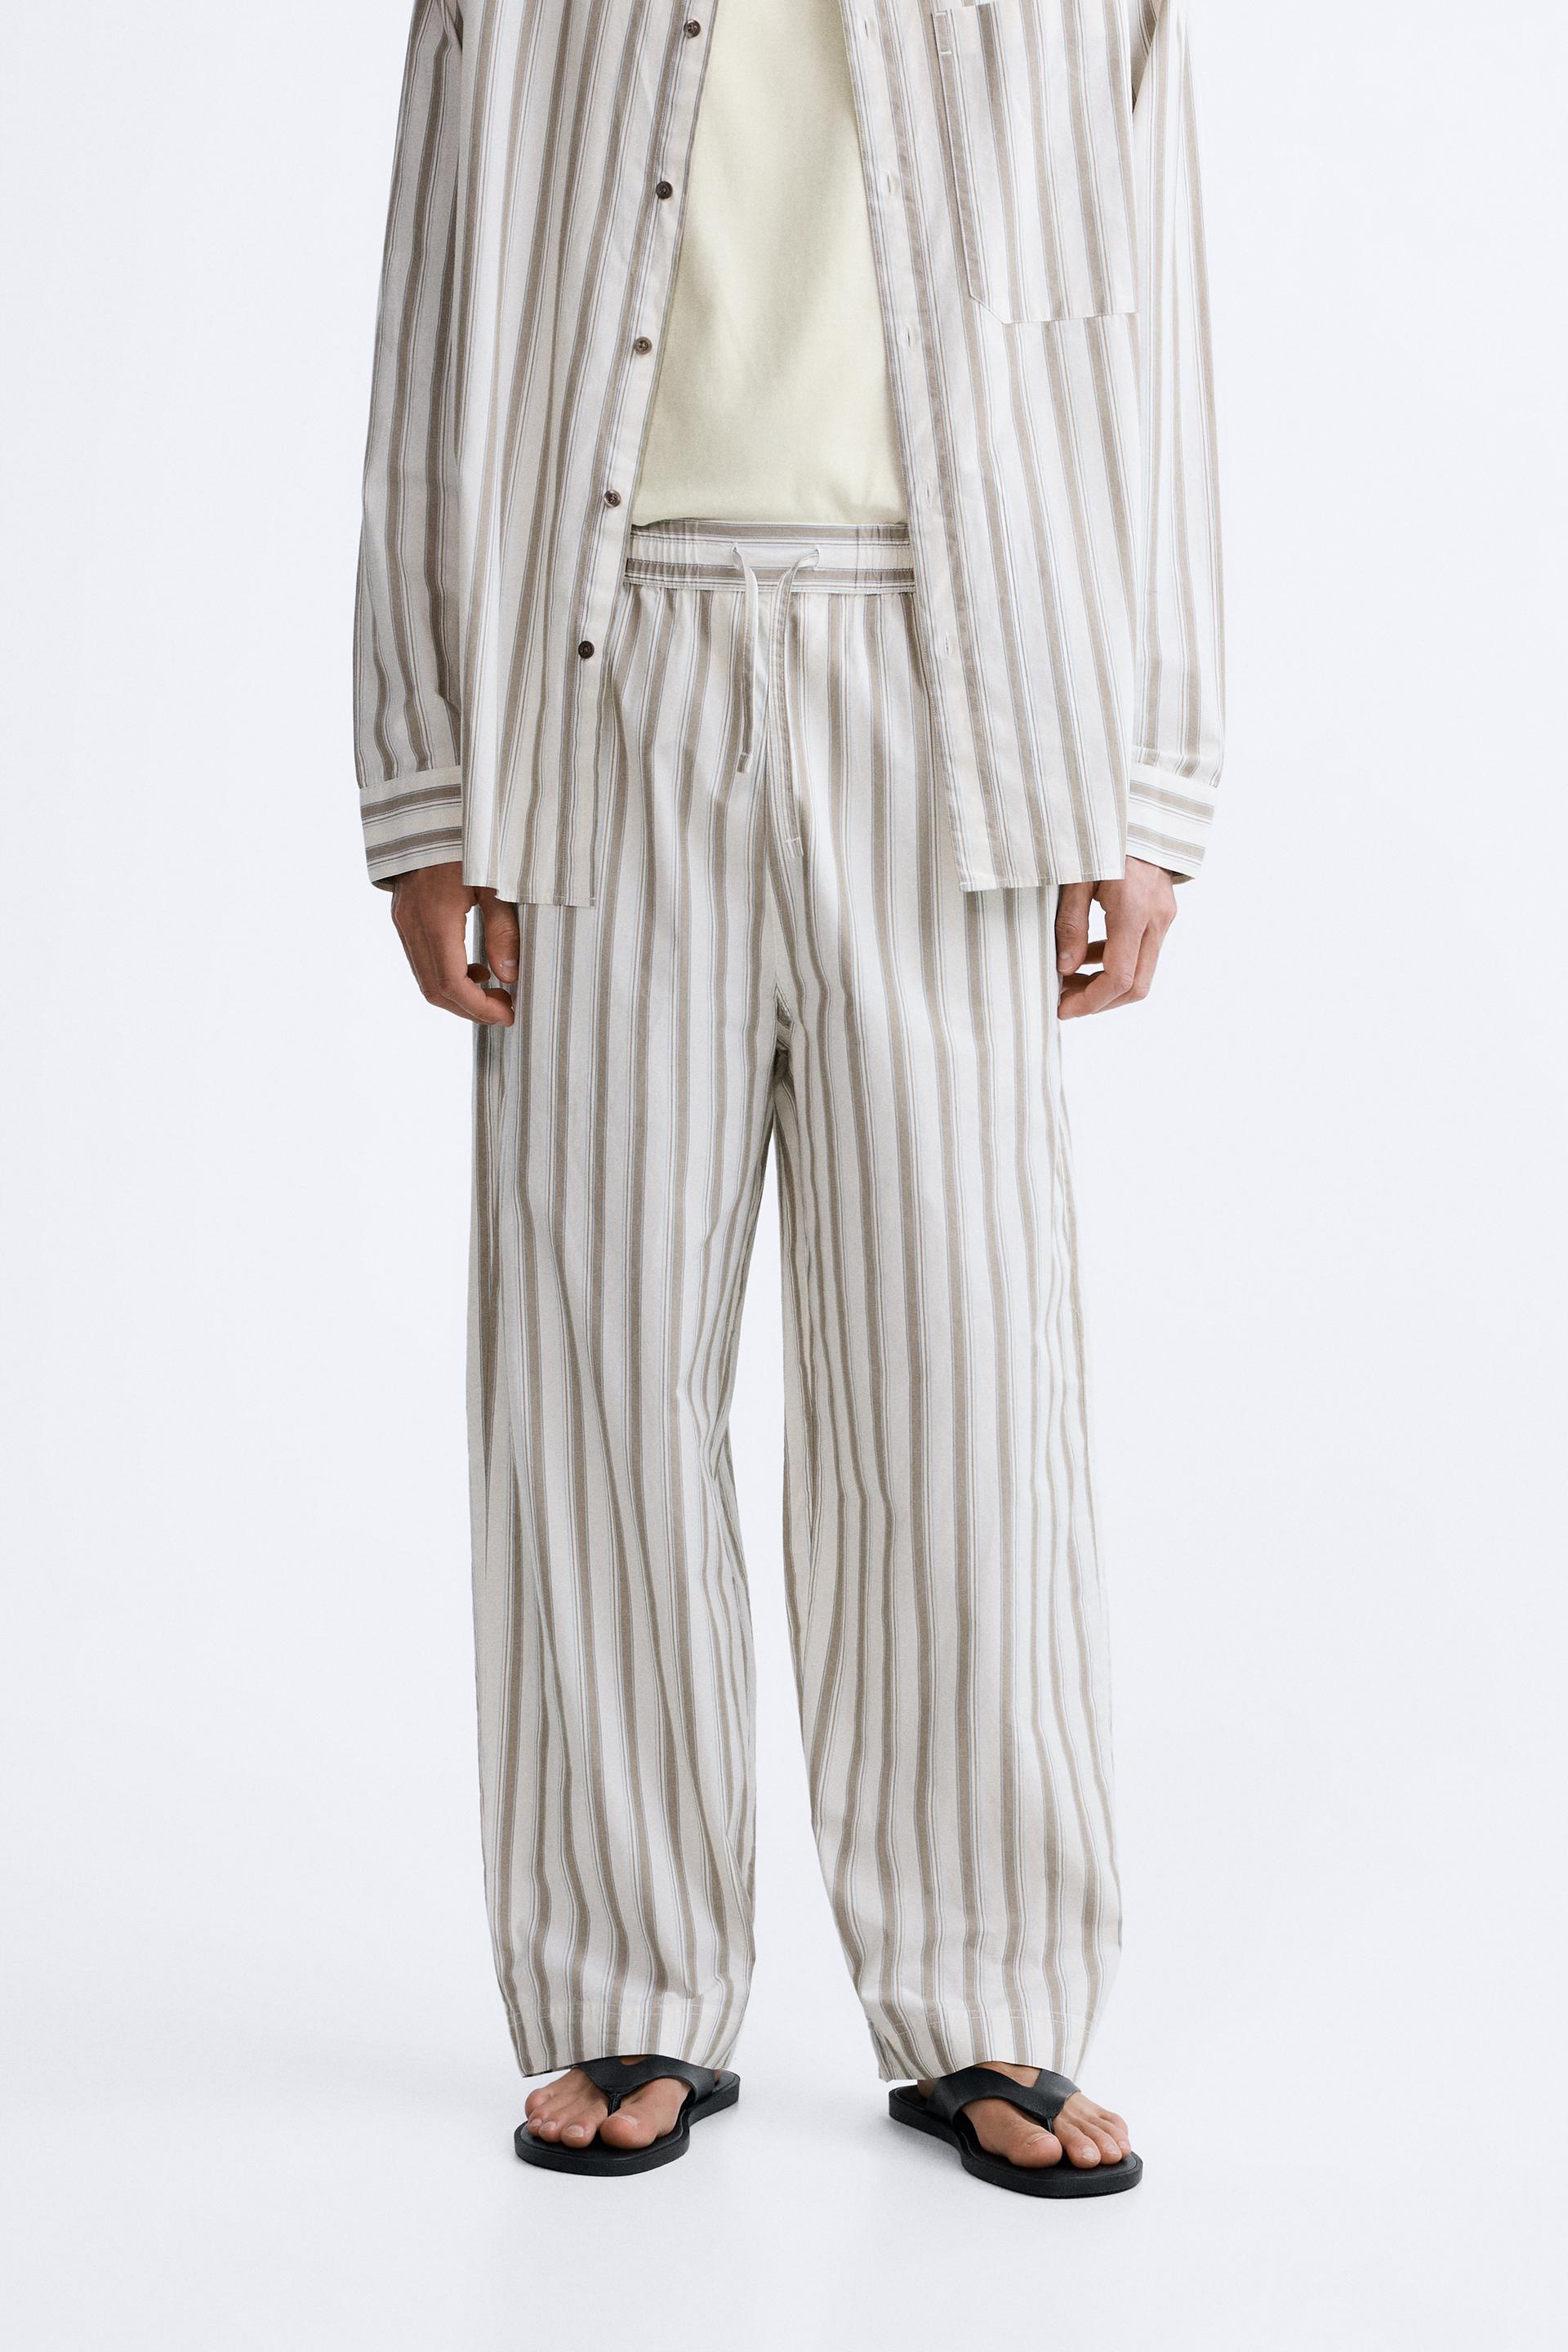 Zara High-Waist Striped Professional Masculine Work Pants Taupe